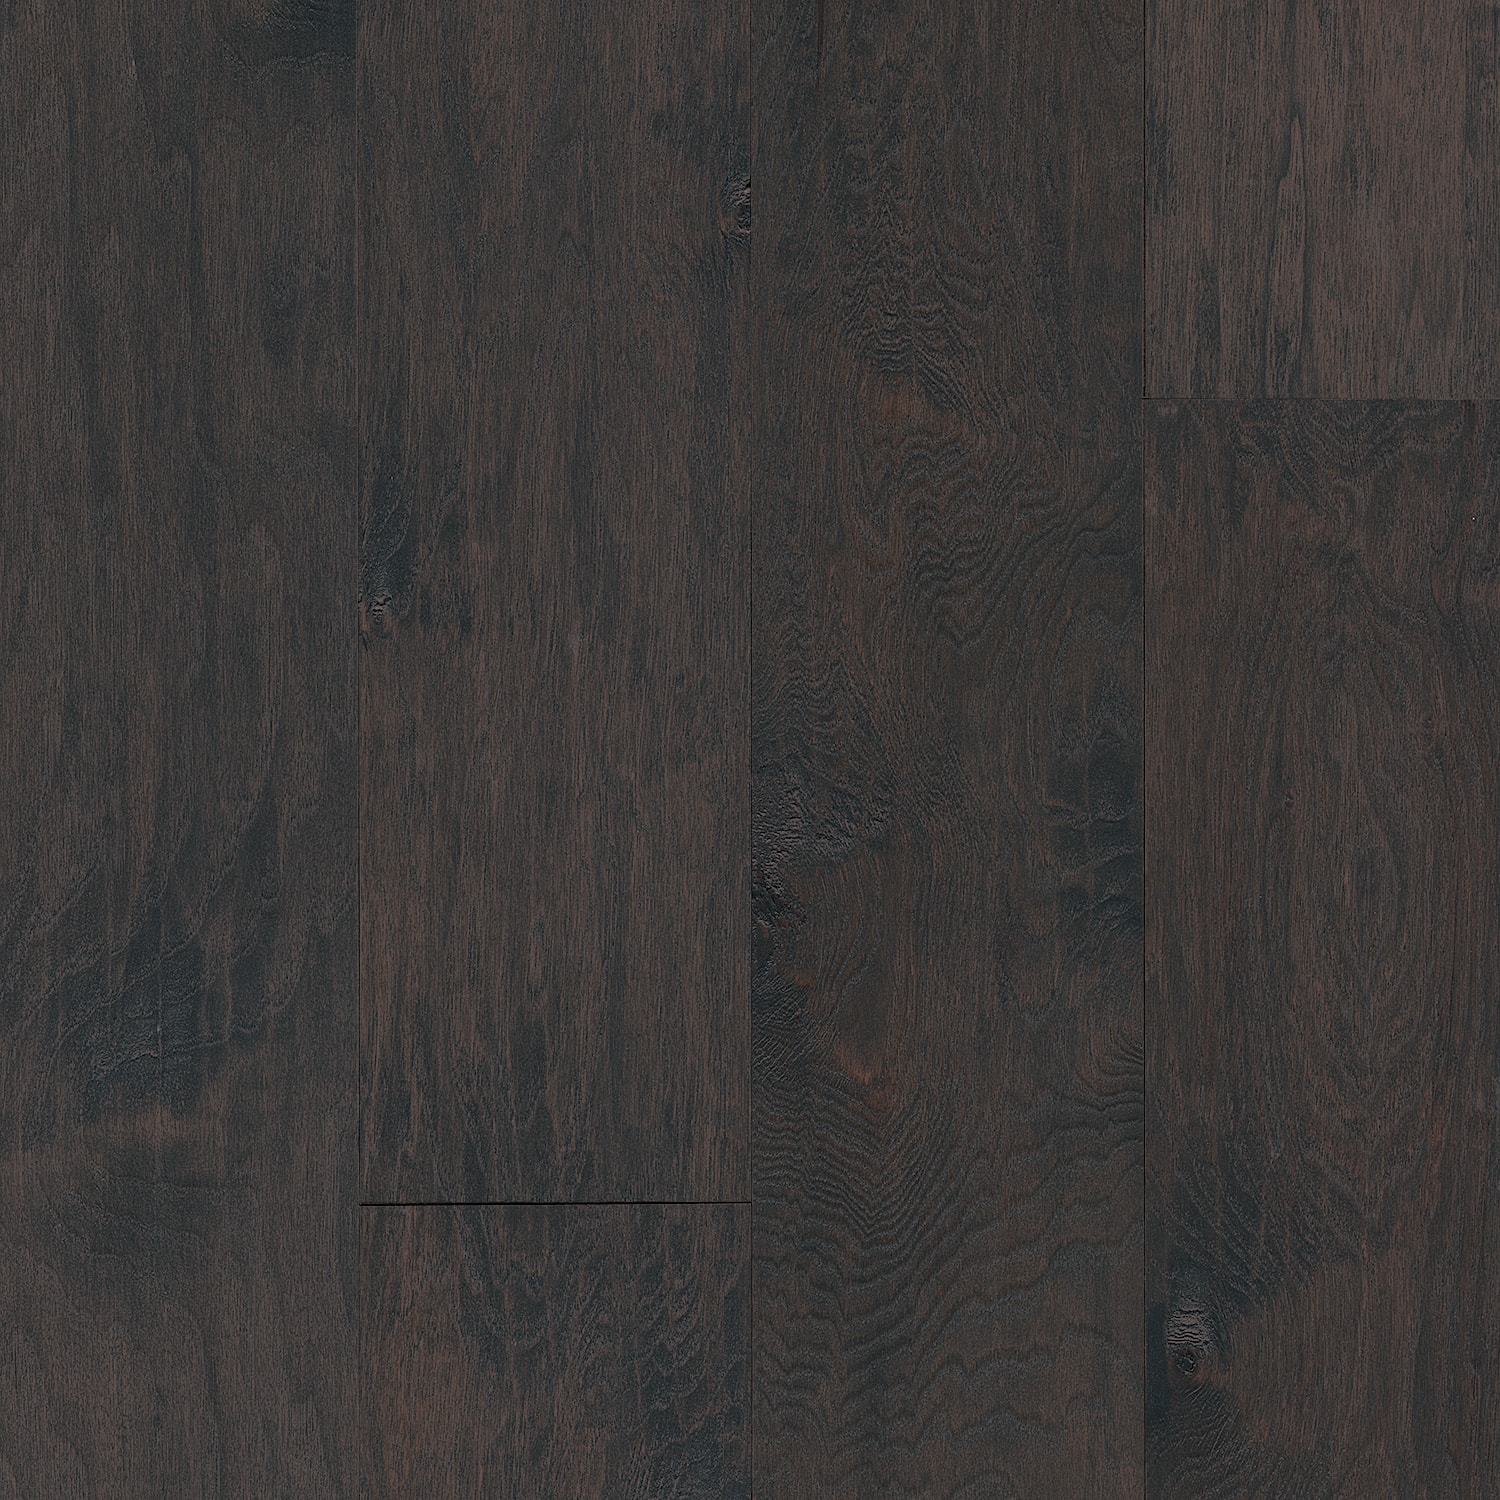 Forged gray hardwood floor